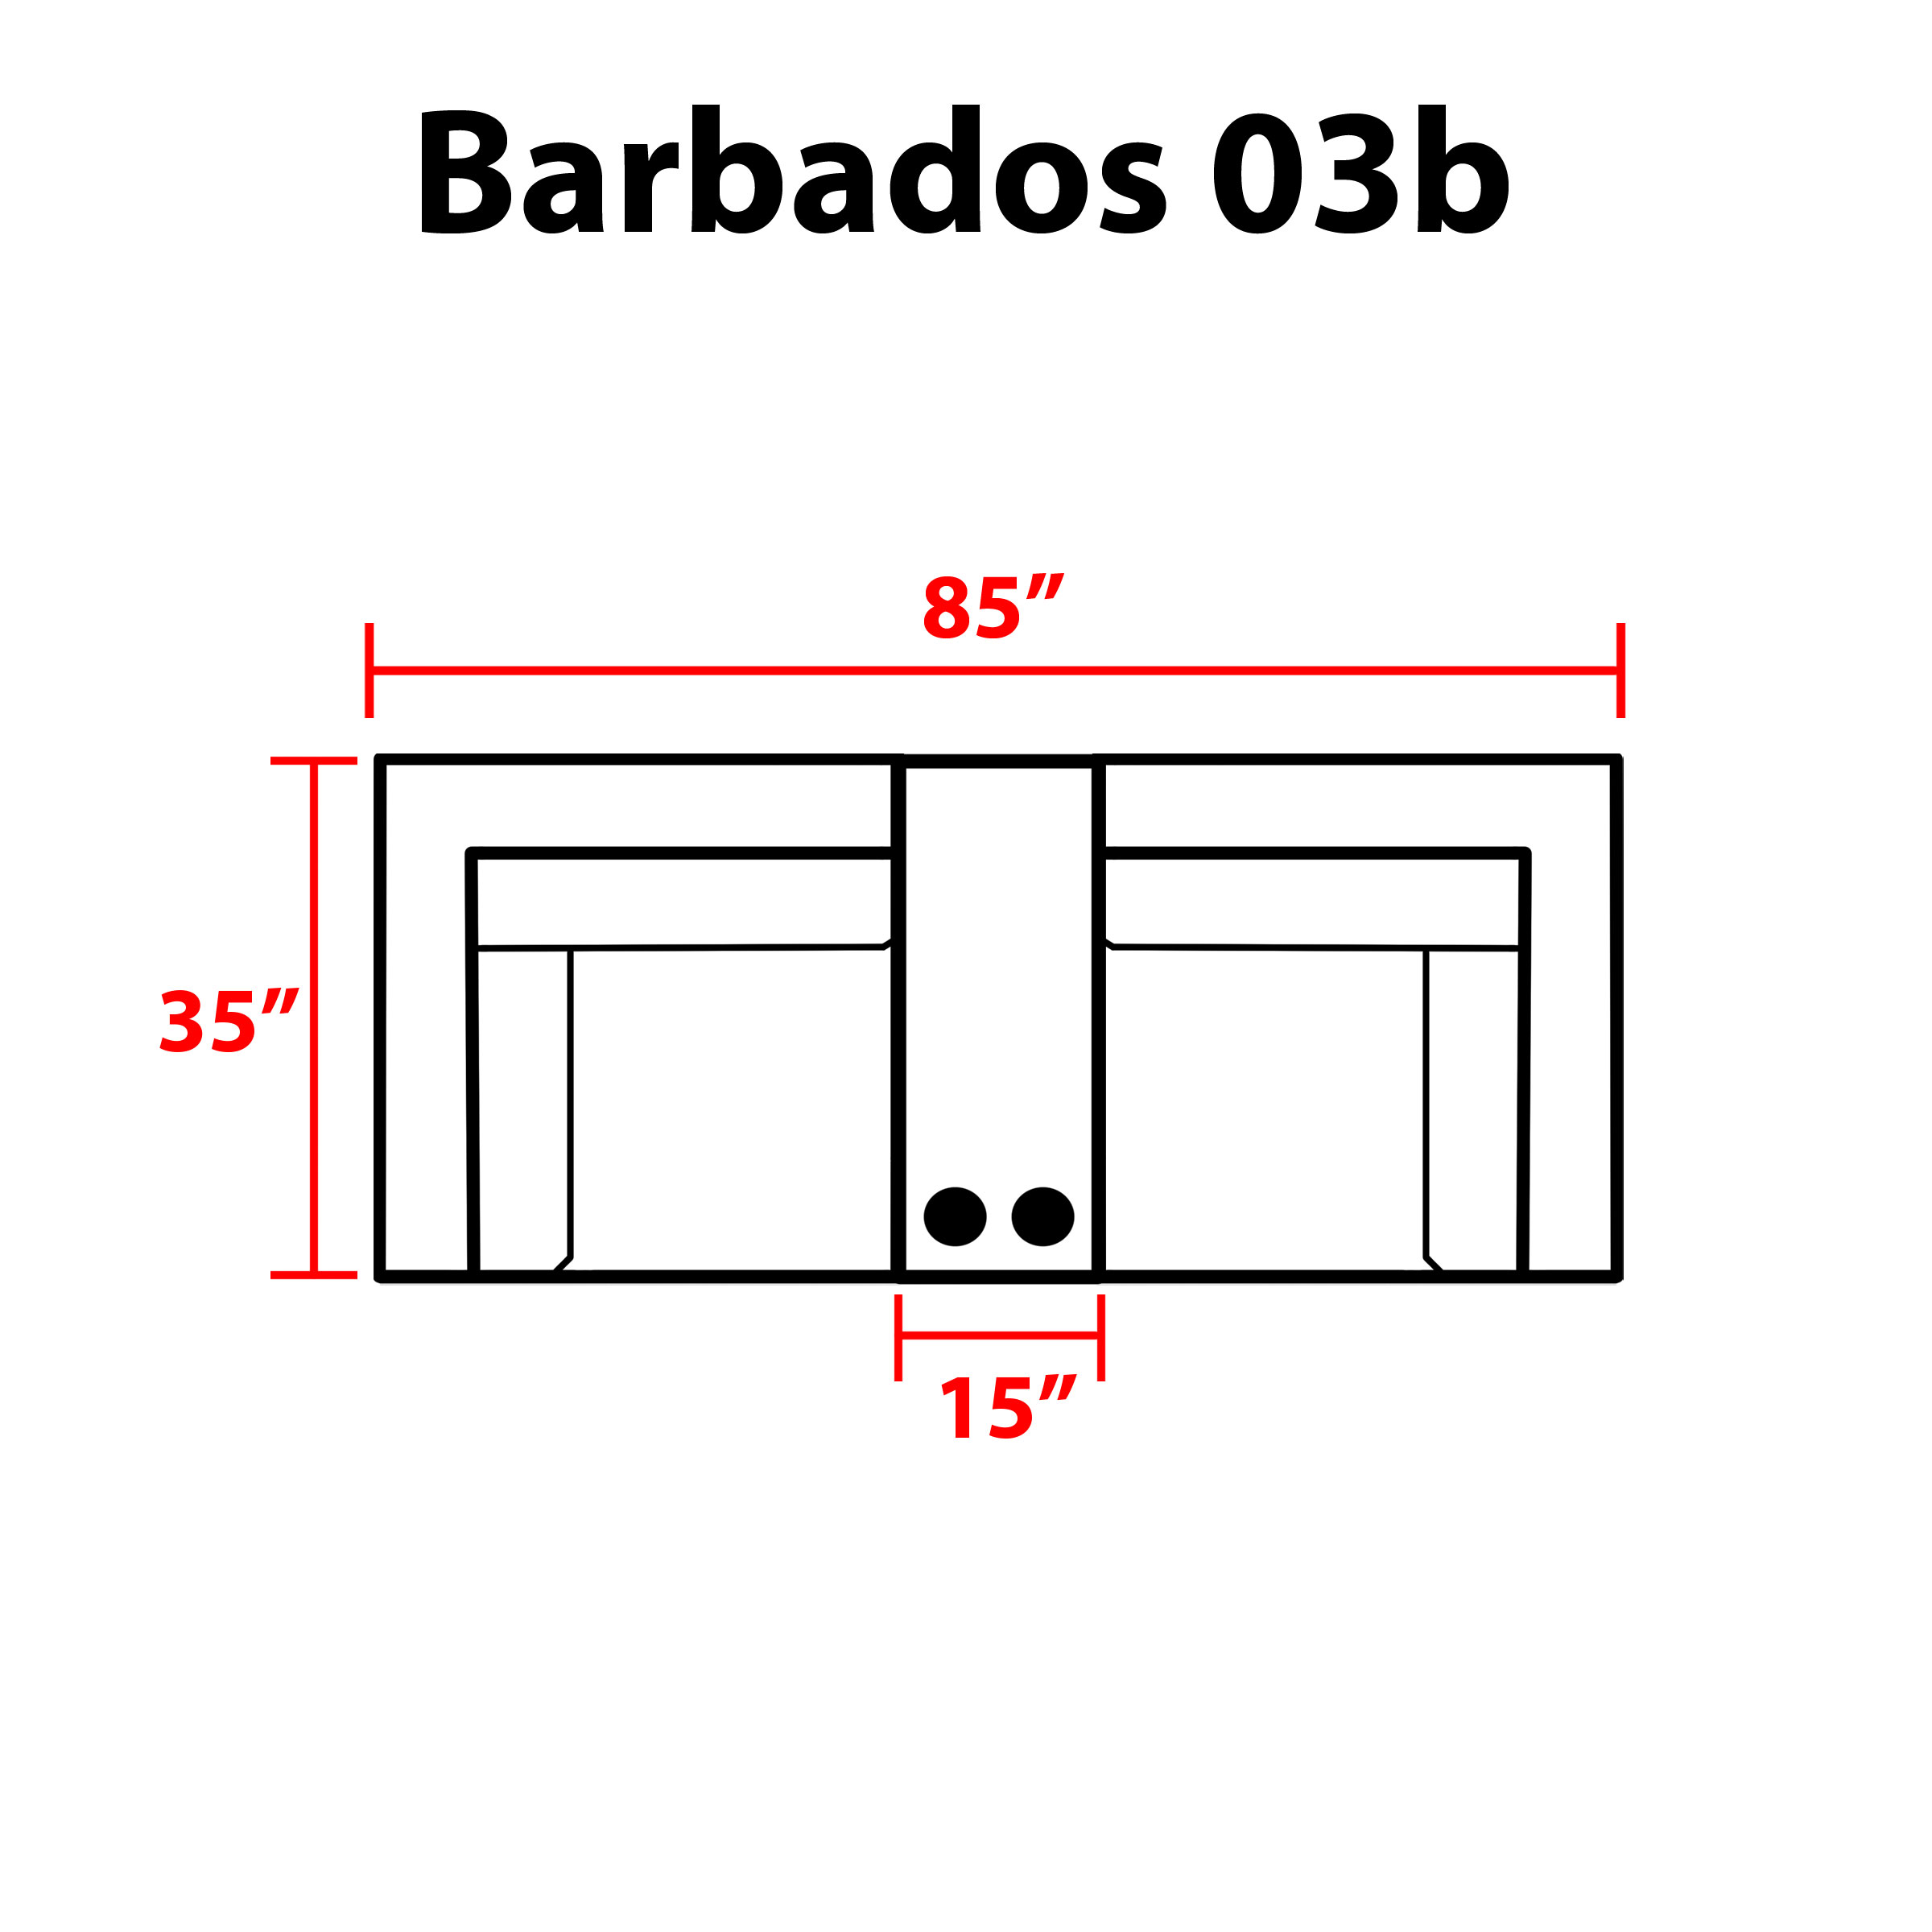 Barbados 3 Piece Outdoor Wicker Patio Furniture Set 03b - TK Classics